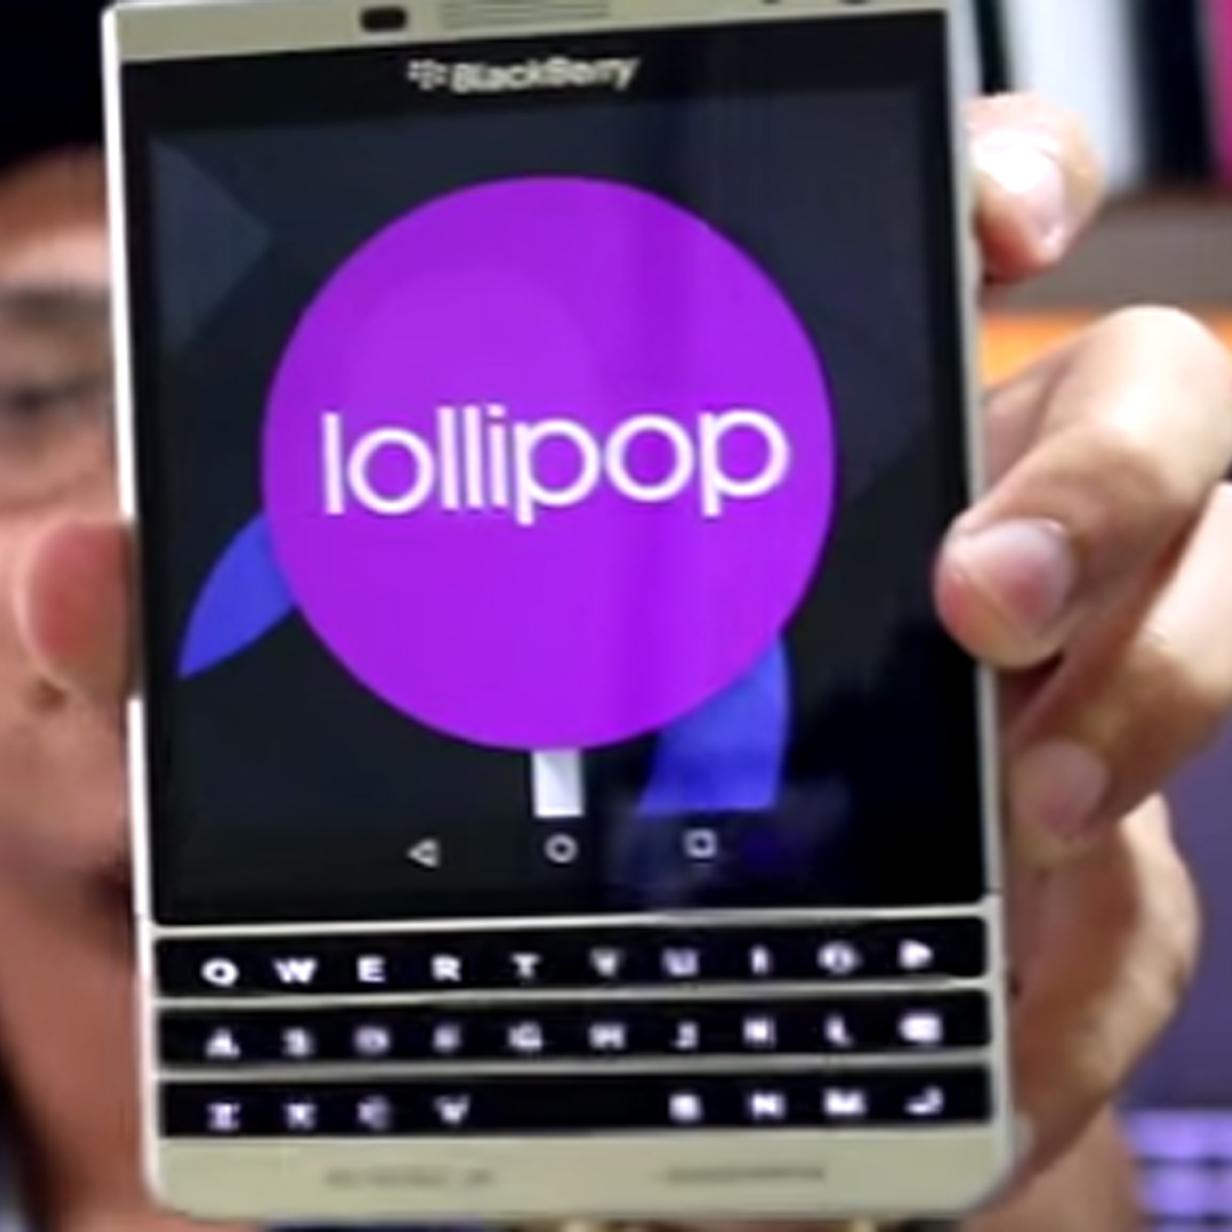 Neues Blackberry Smartphone Fur 21 Angekundigt Kurier At